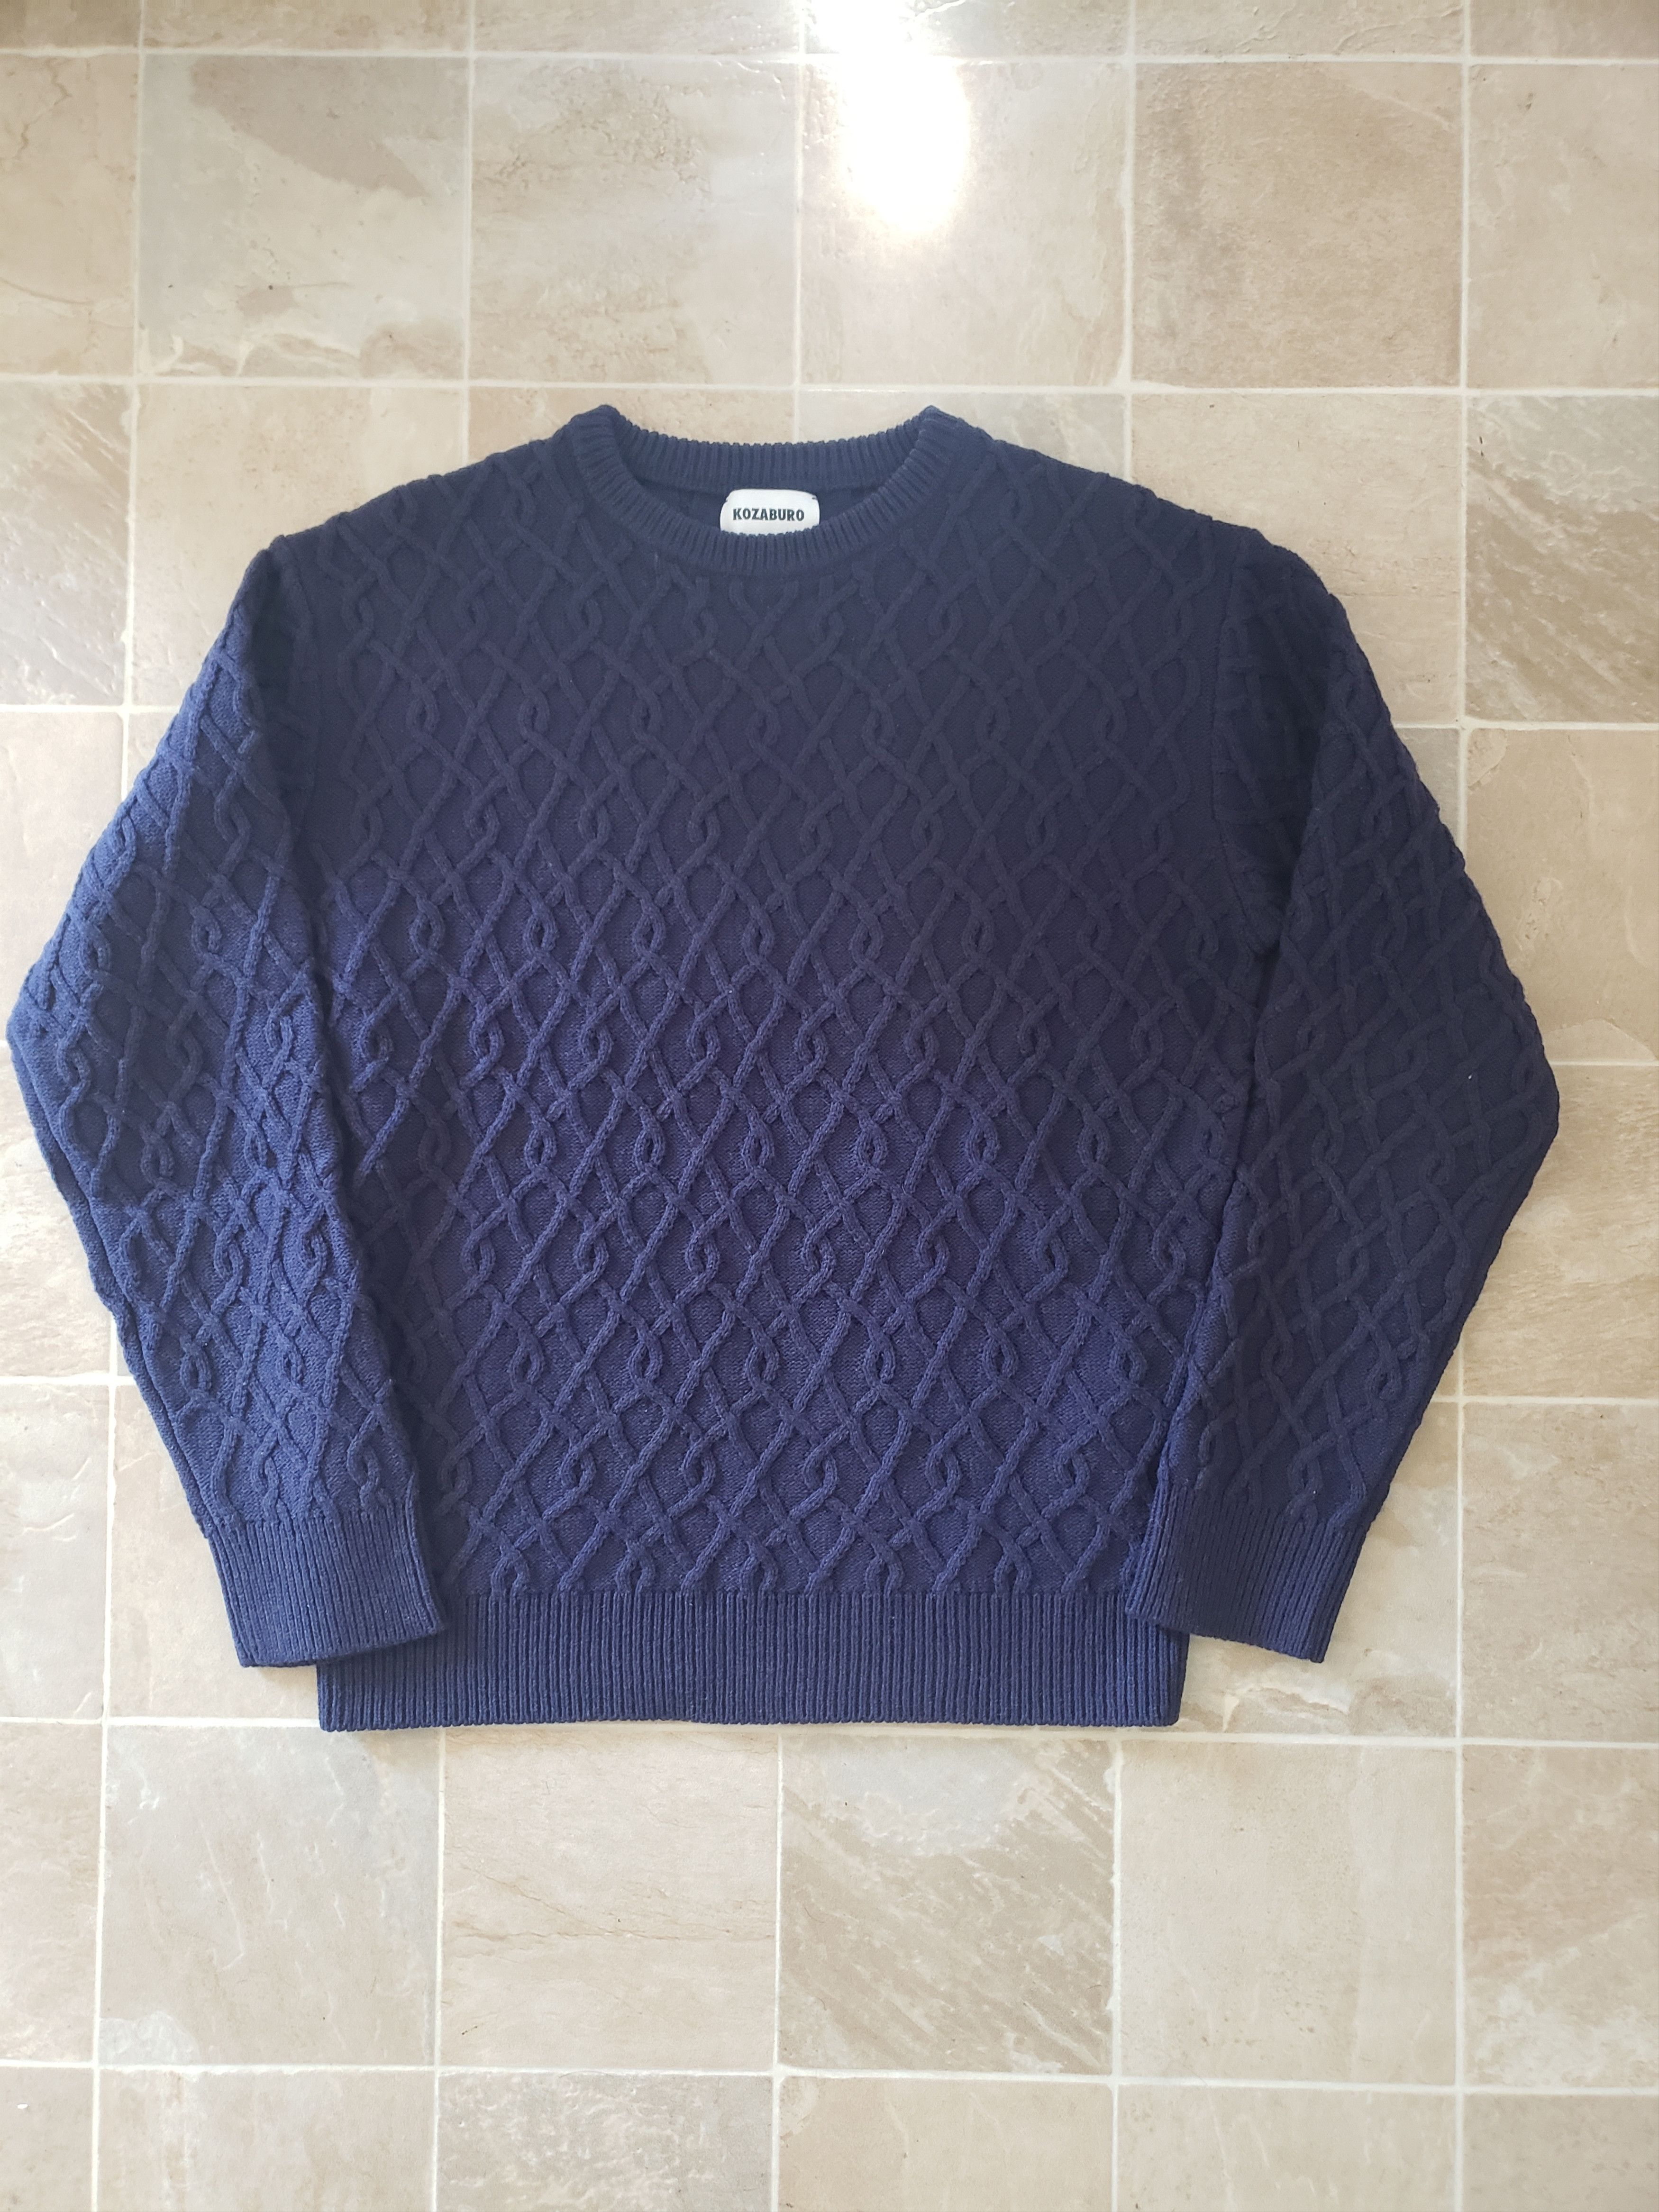 Kozaburo Kozaburo AW23 Snake Cable Knit Wool Sweater | Grailed